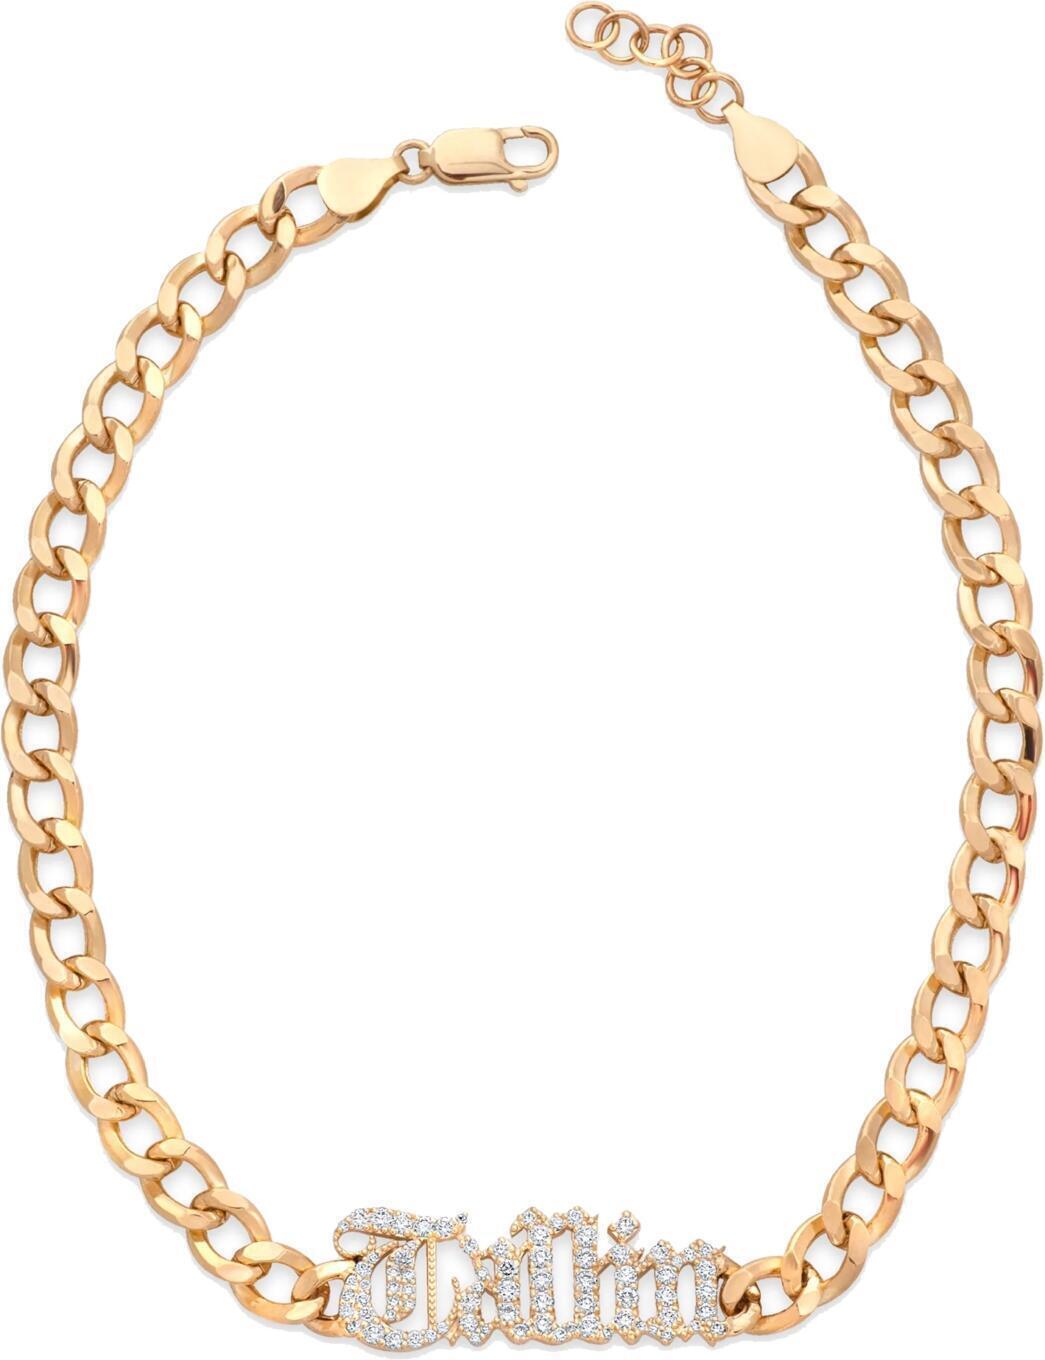 nicolerosejewelry gothicletterchokernecklace gold diamond